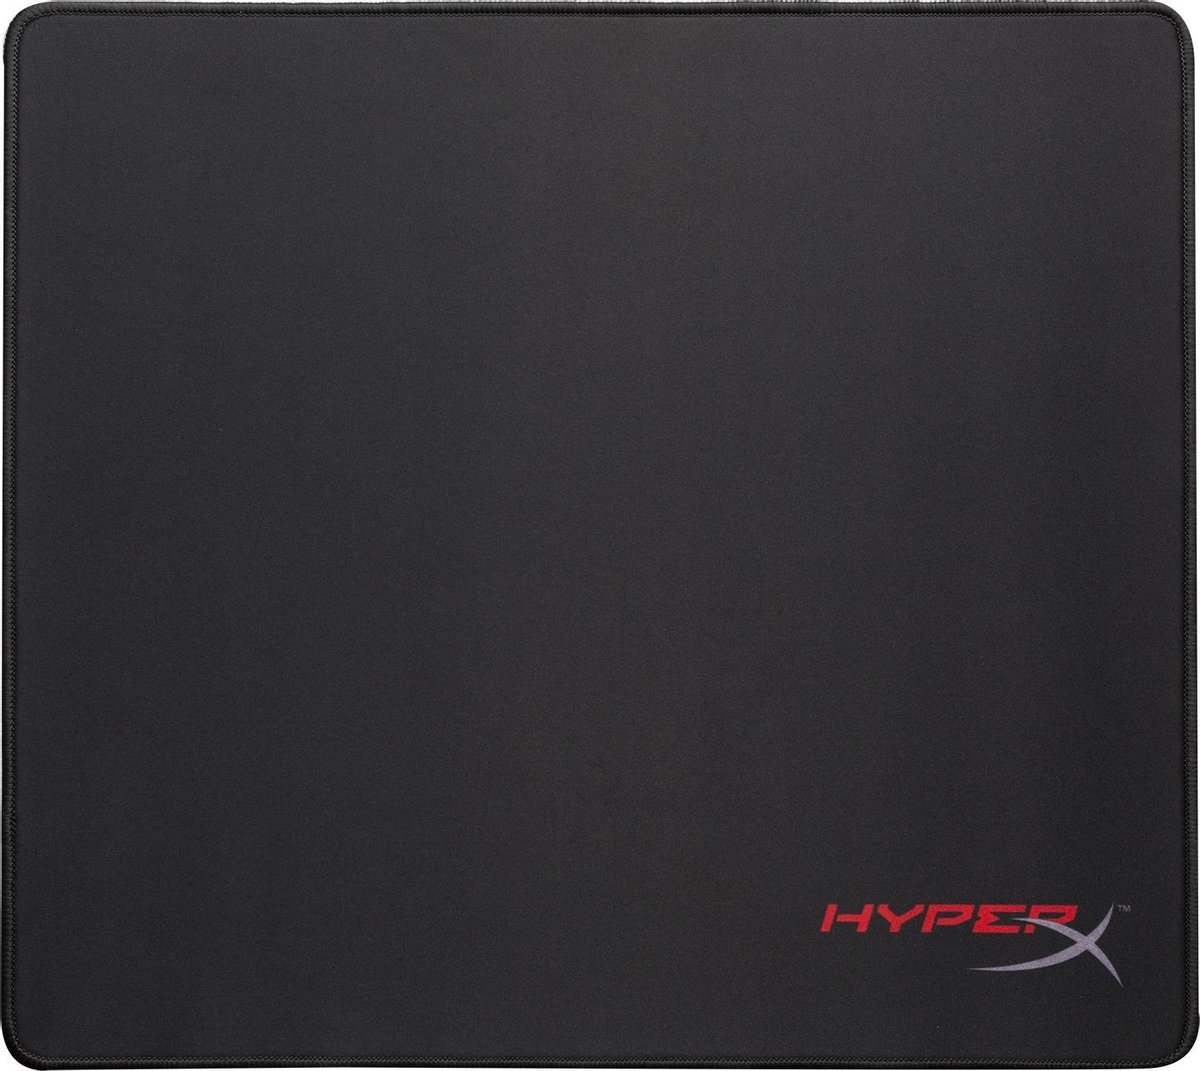 HyperX Fury S Pro Gaming L Muismat - Zwart